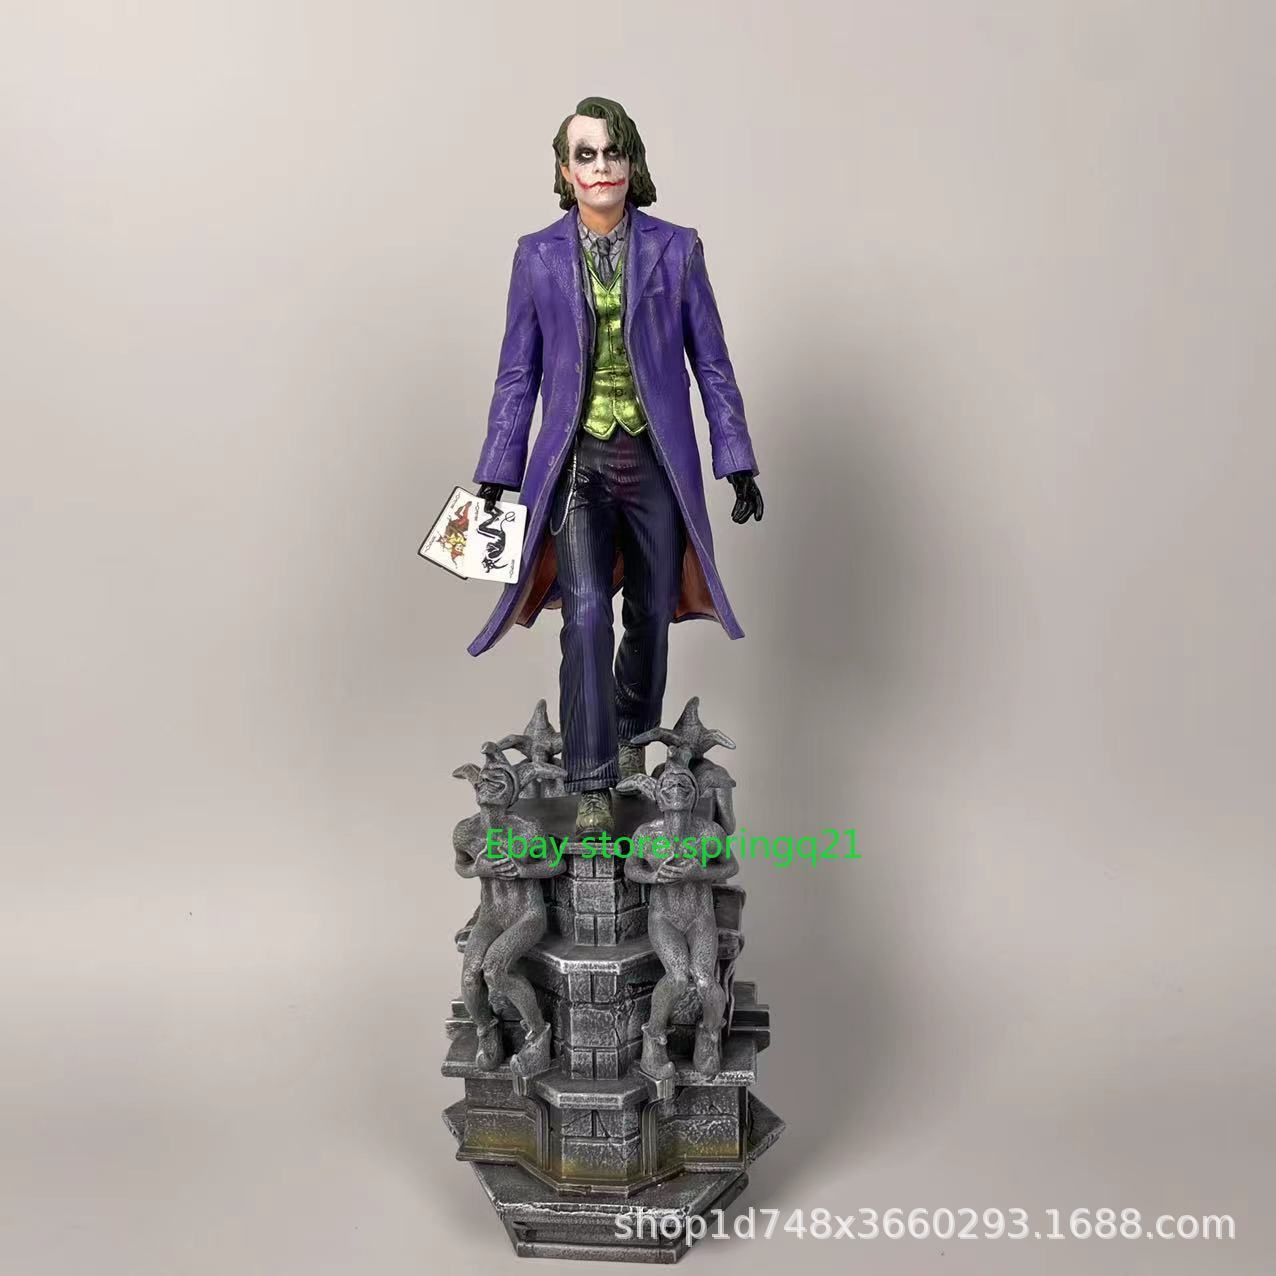 Batman: The Dark Knight Joker Heath Ledger Statue Resin Figure 12in Ornament Toy